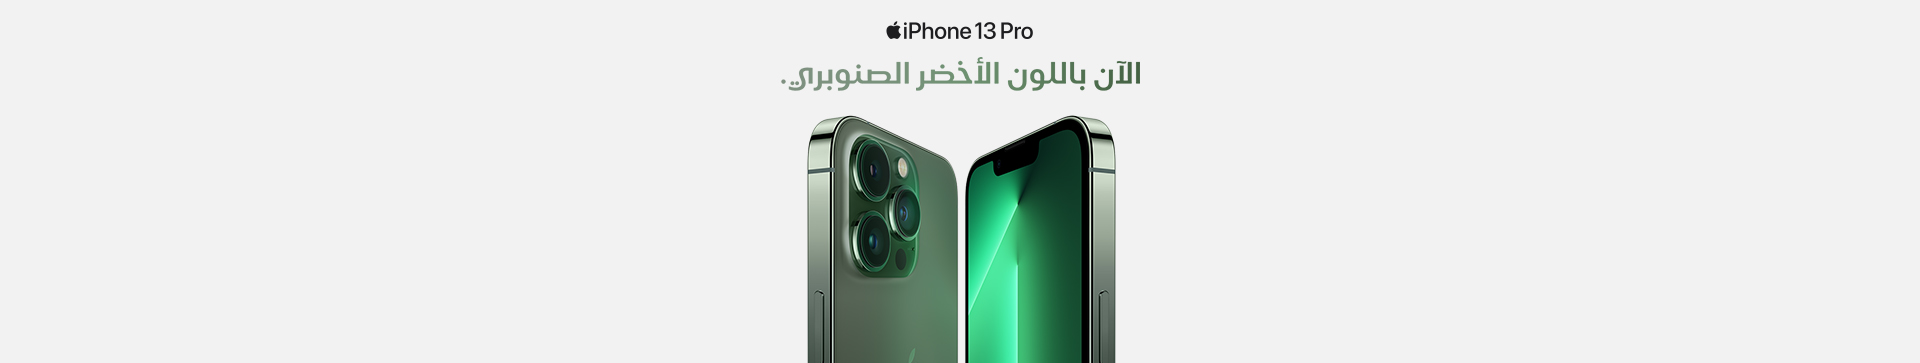 iPhone-13-pro-pre-avail-ar-1920x363